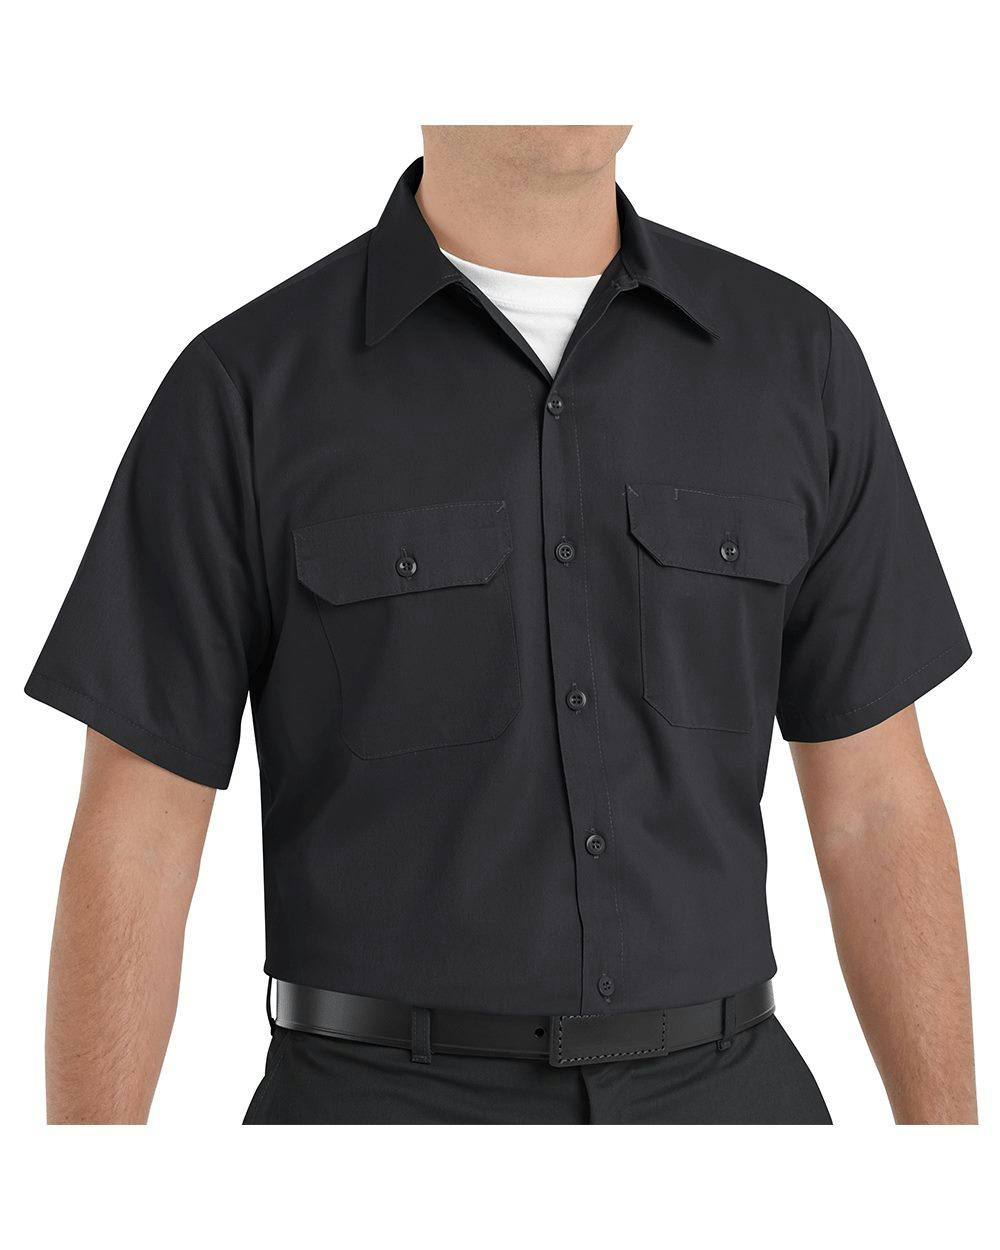 Image for Utility Short Sleeve Work Shirt - ST62